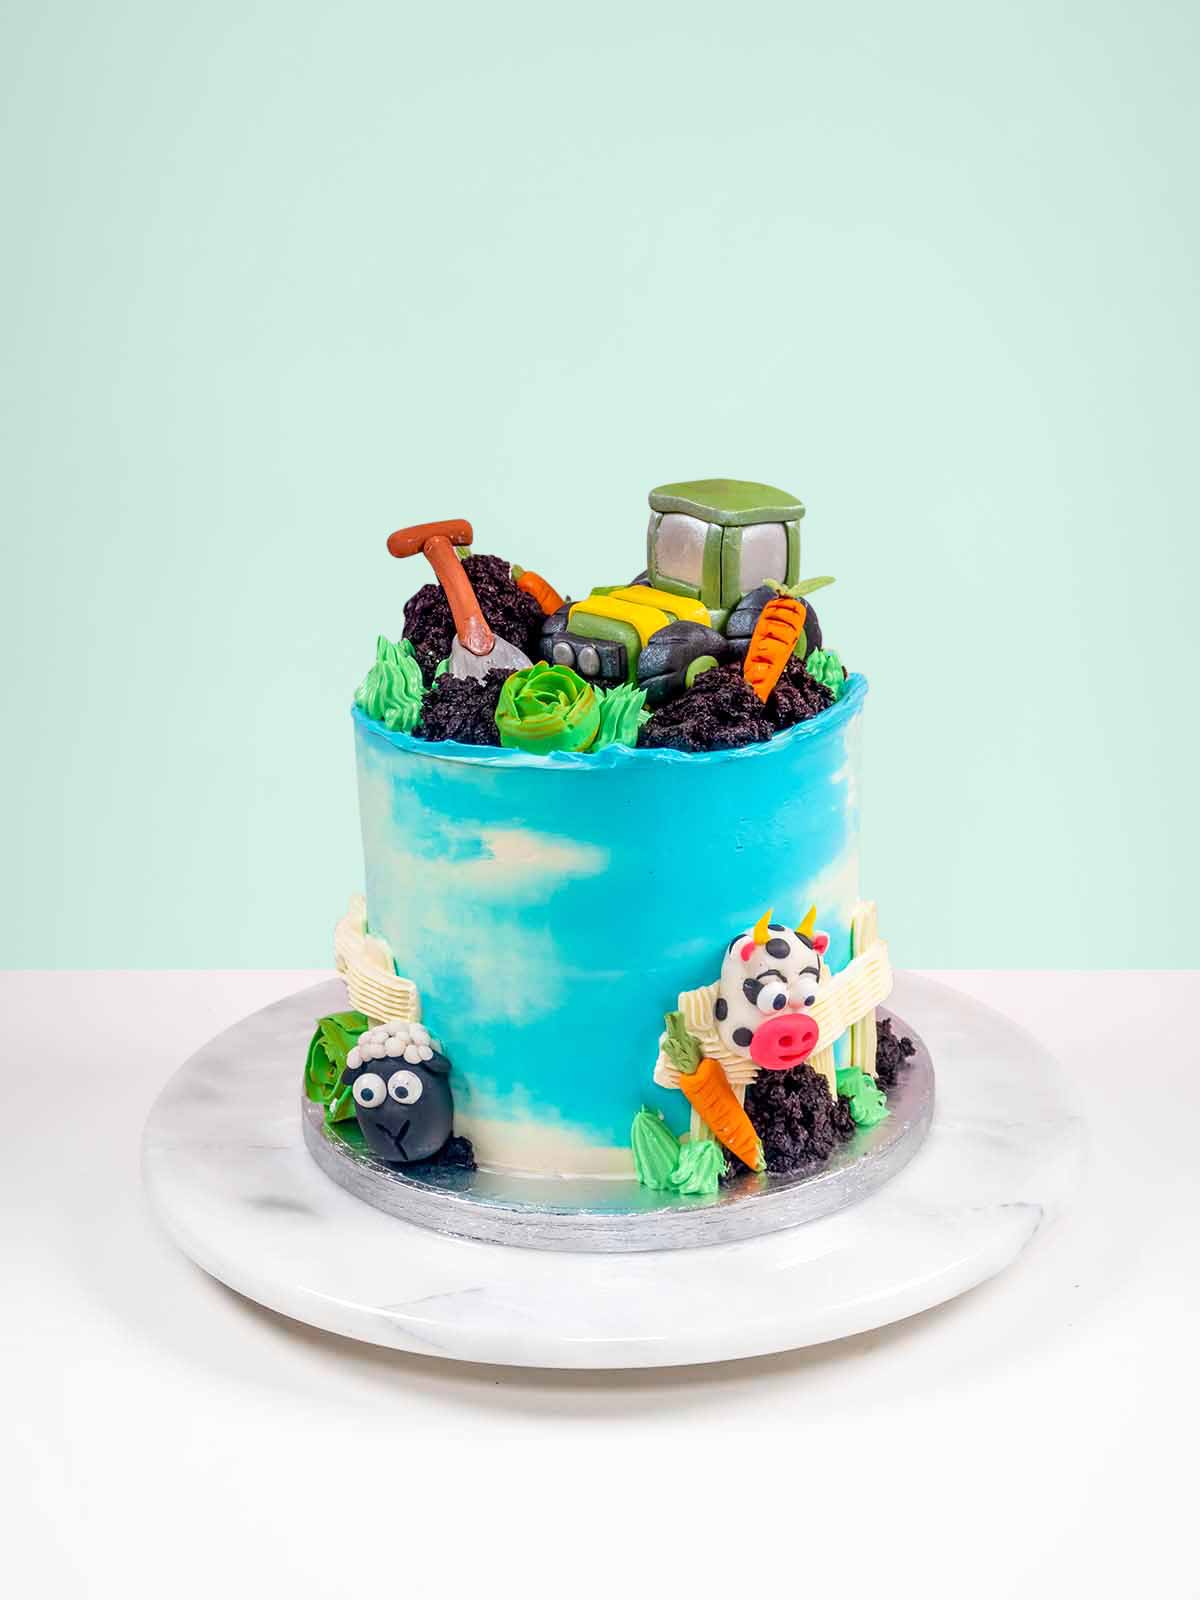 Bakes By Elise - Xbox Cake Birthday 💚 . . . . . #cake #cakes #dripcake  #vanilla #jam #buttercream #playstation #white #xbox #celebration #blue  #green #pink #pretty #london #northlondon #barnet #highbarnet #pottersbar #